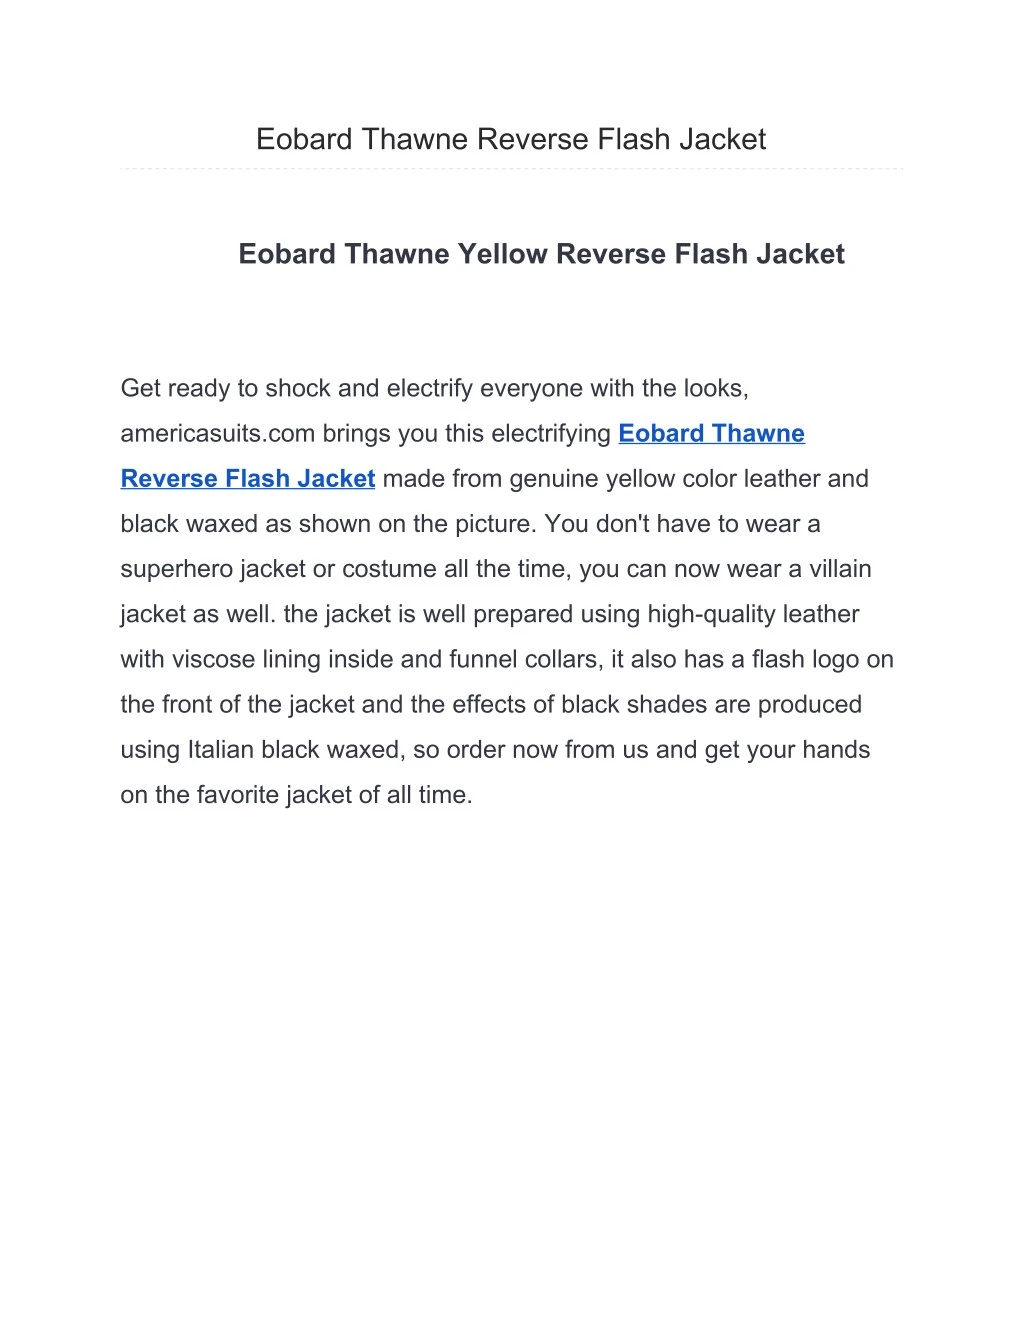 eobard thawne reverse flash jacket